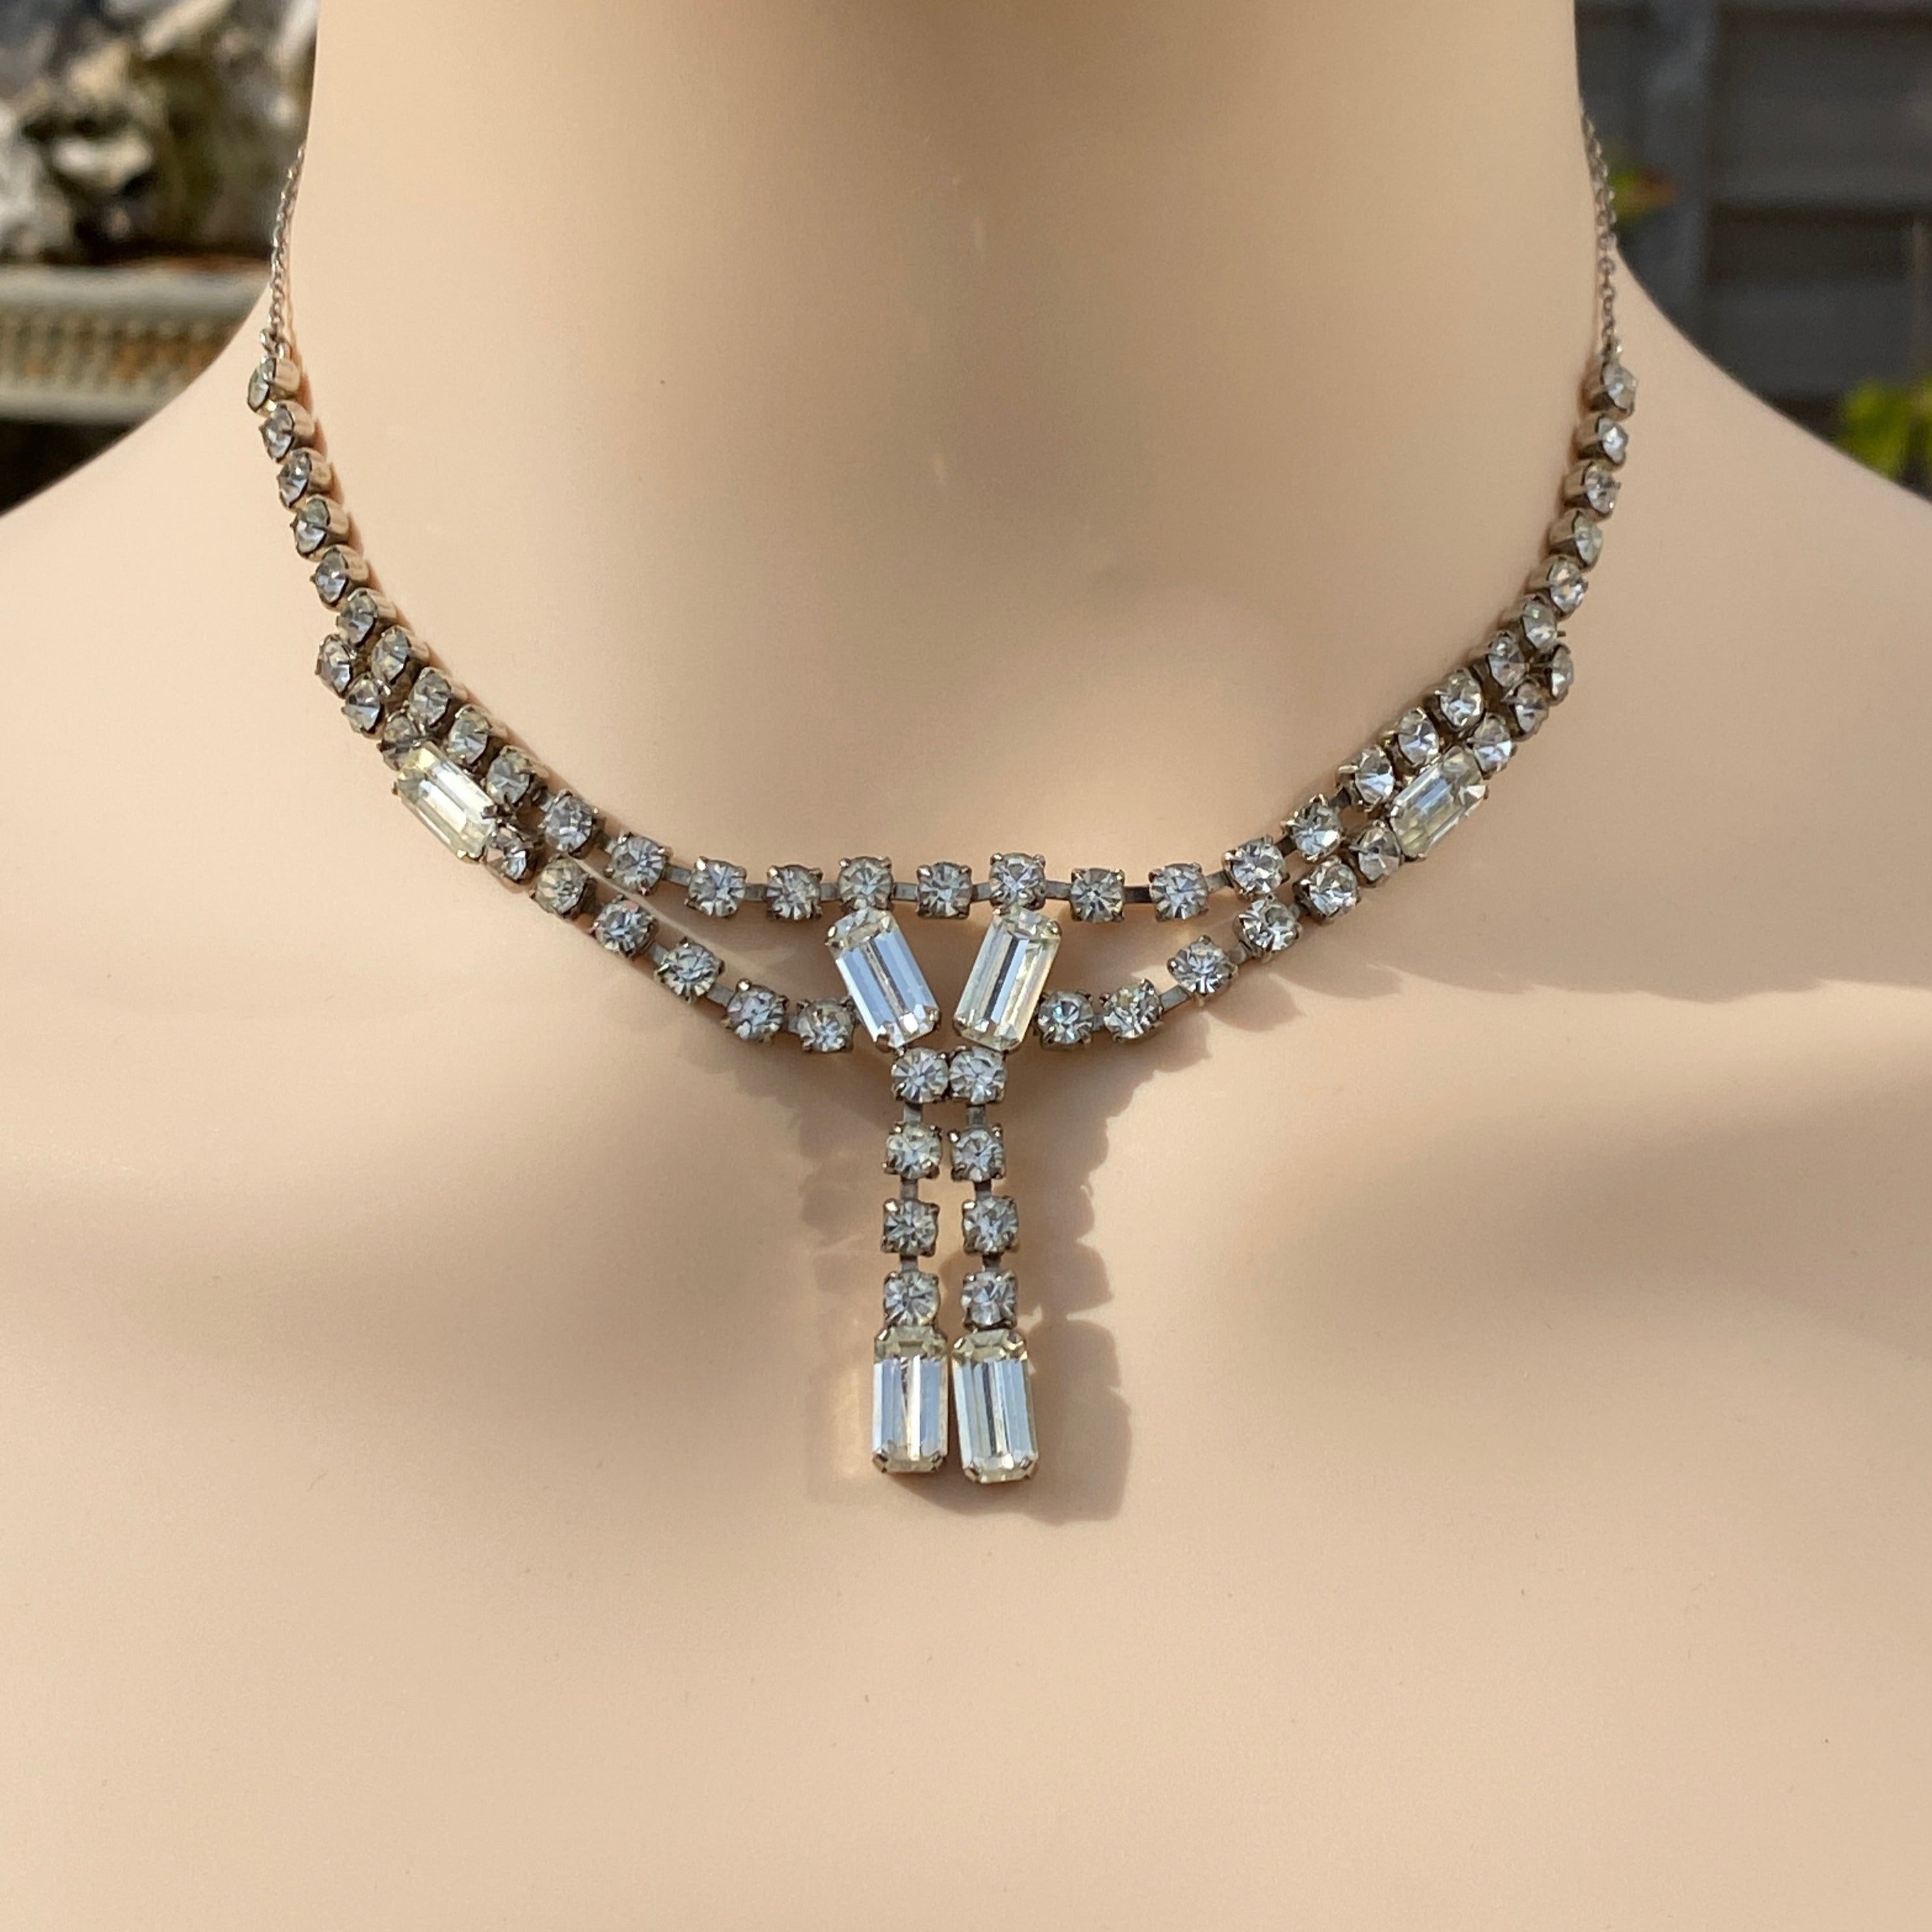 Vintage Rhinestone Prom/Cocktail Necklace.